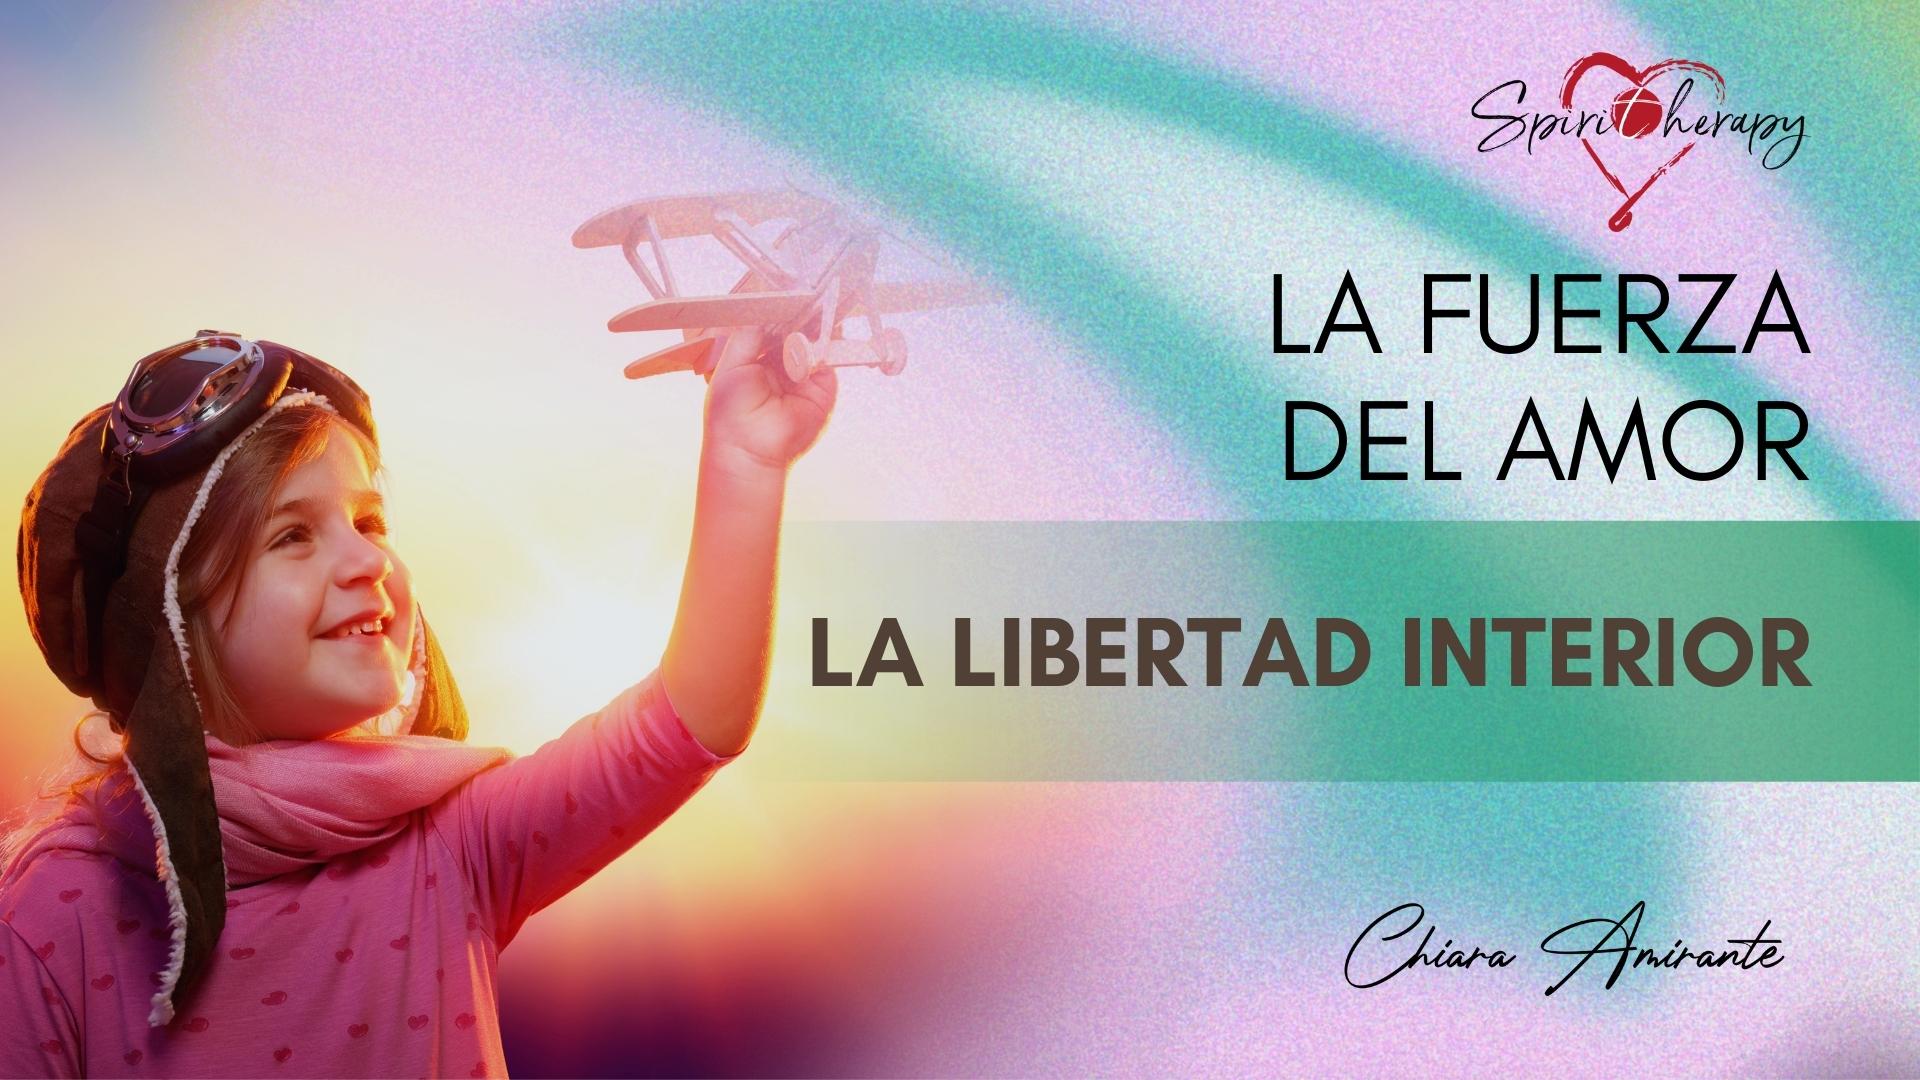 LA FUERZA DEL AMOR - La libertad interior - Chiara Amirante